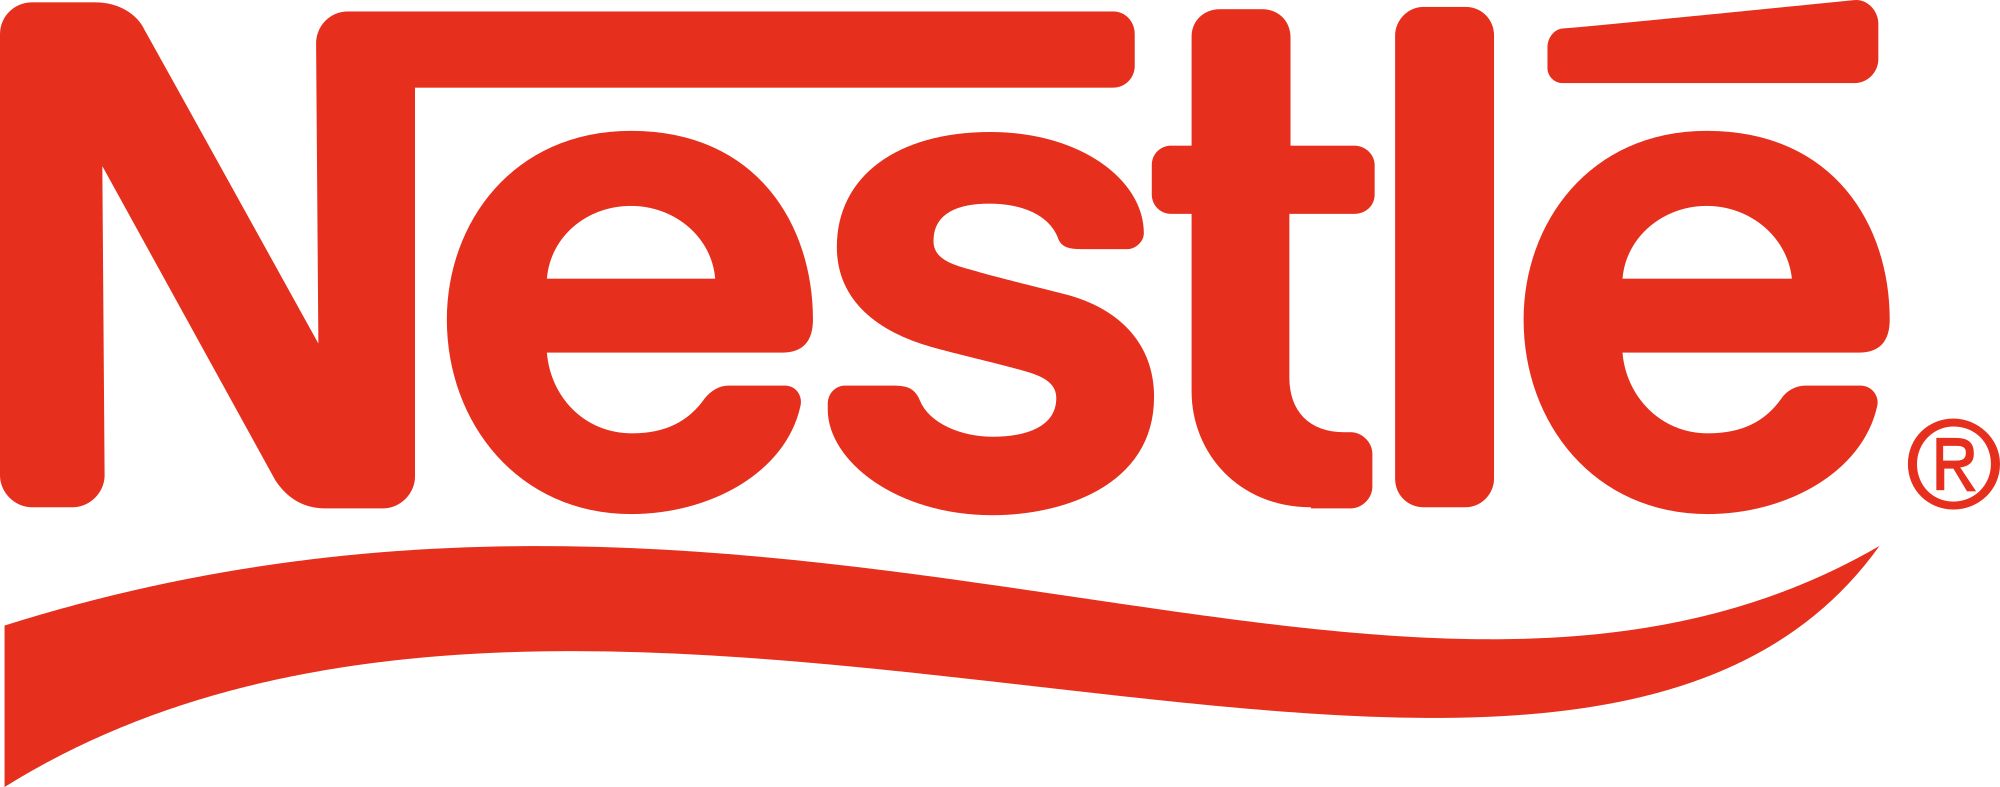 Nestle Logos